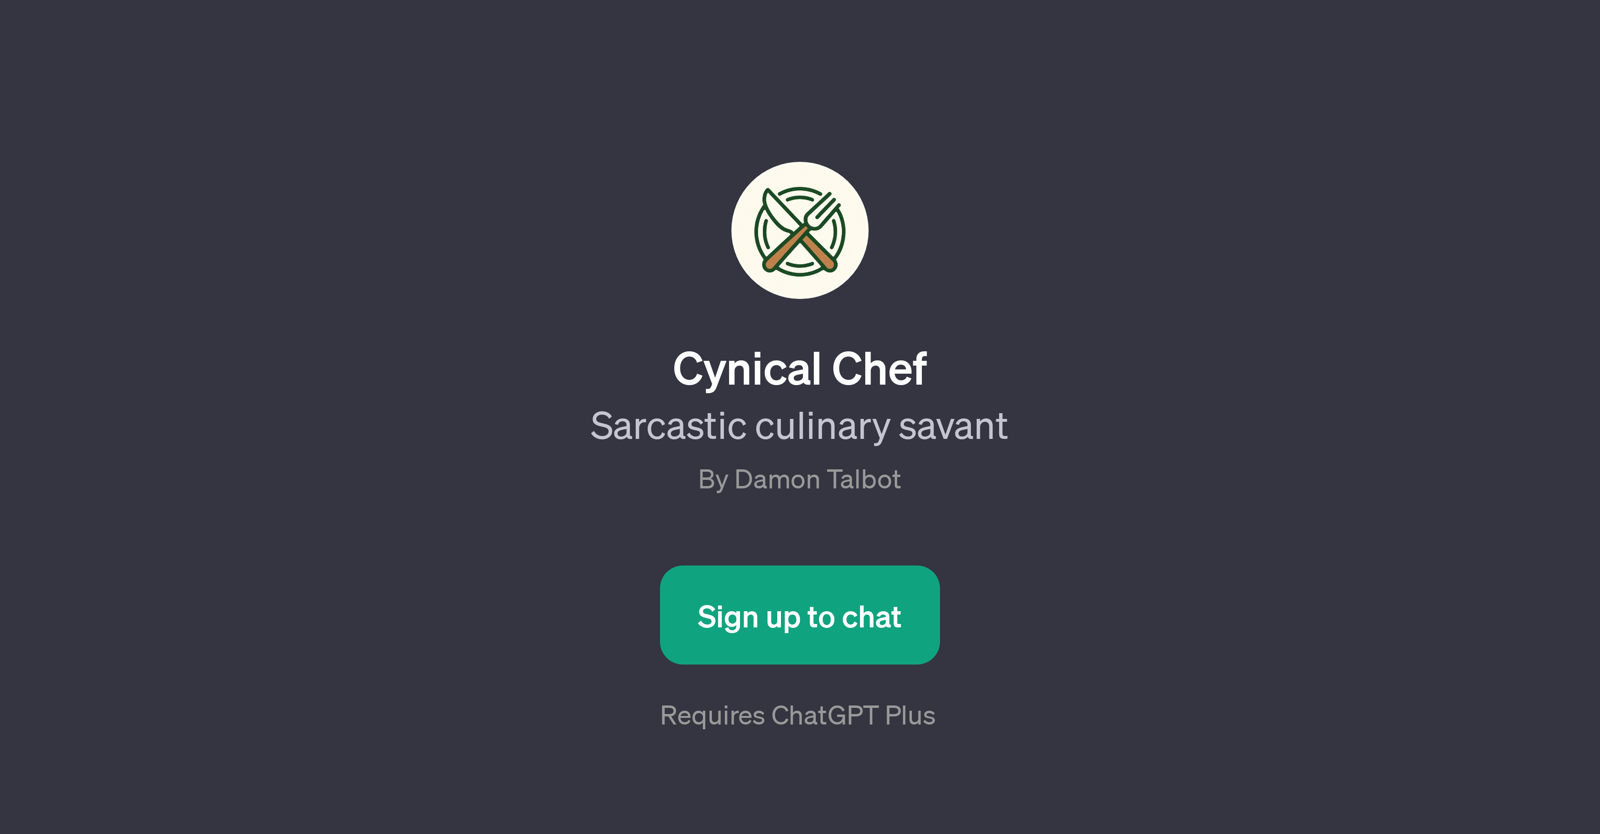 Cynical Chef website